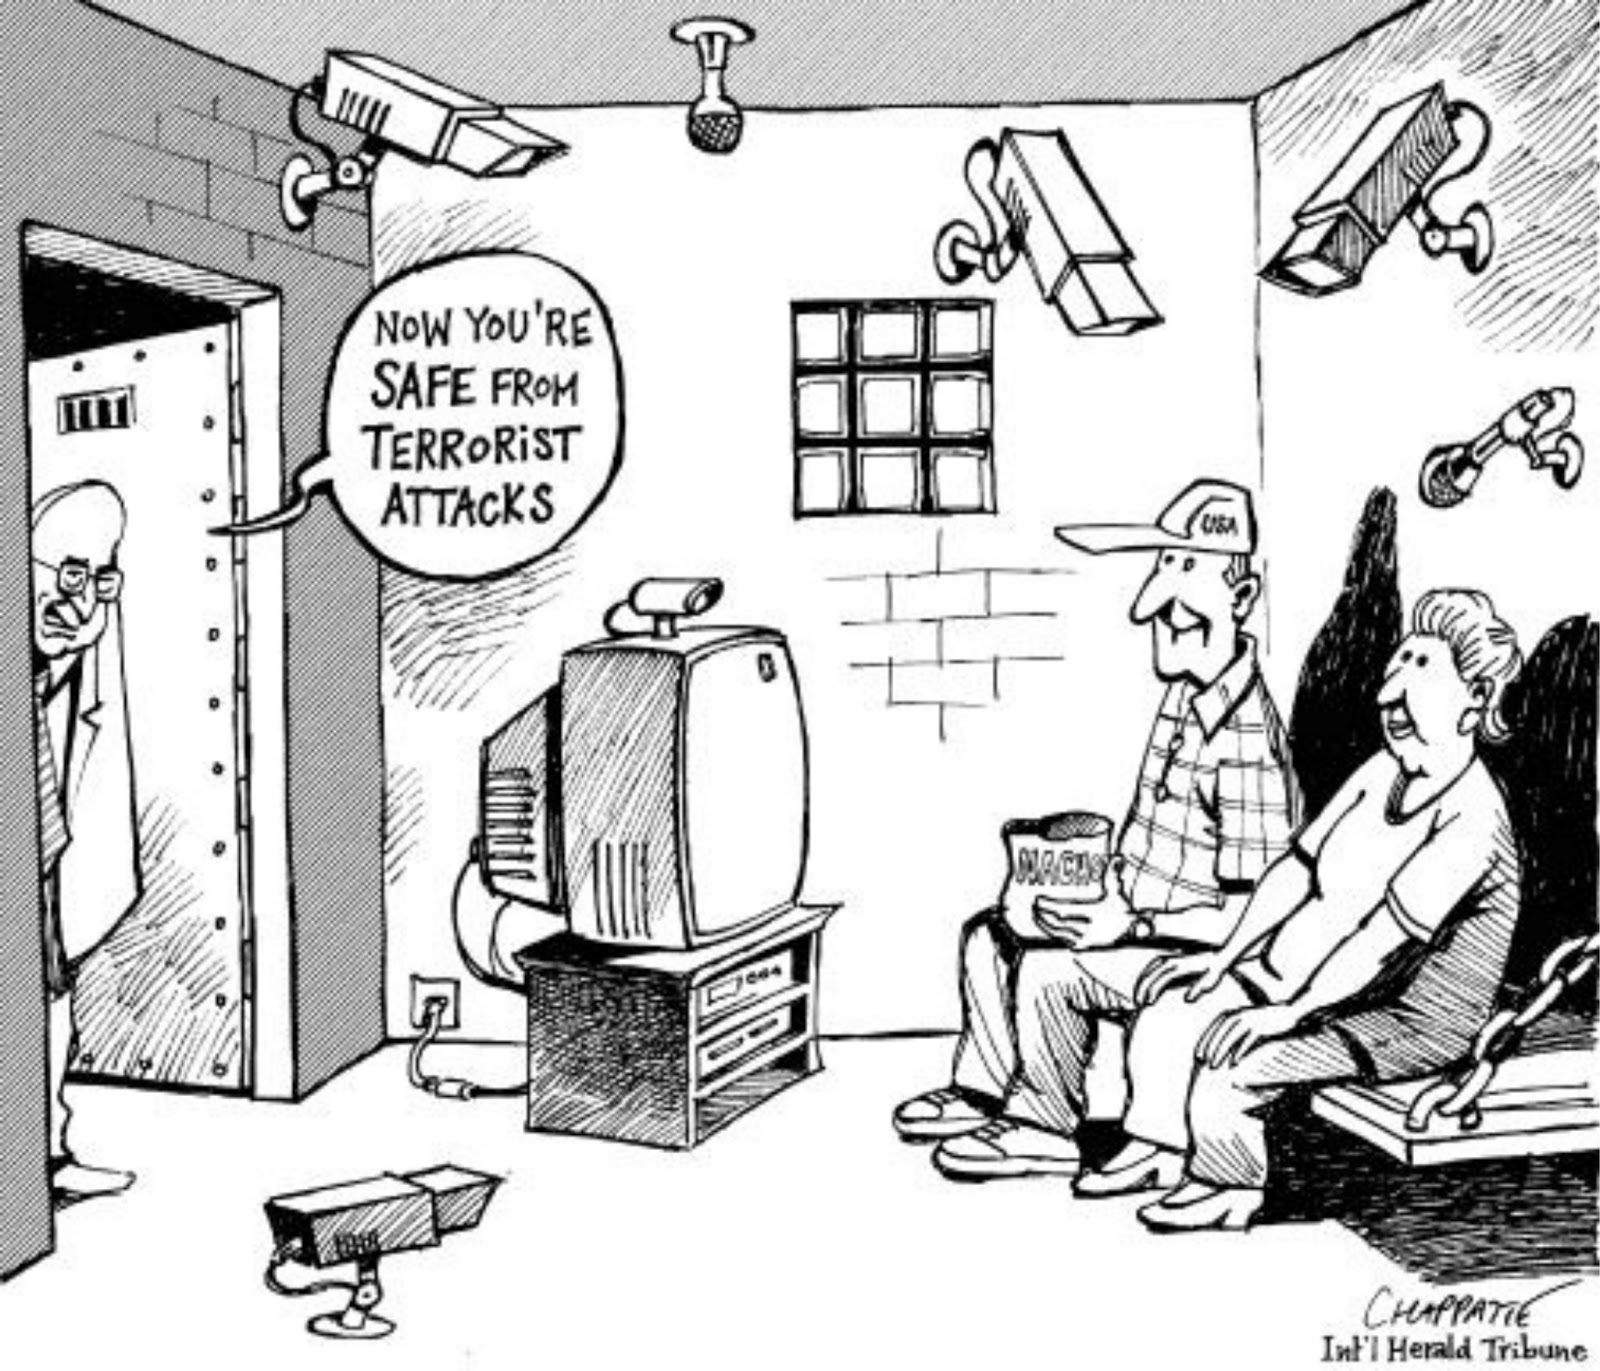 terrorism.jpg